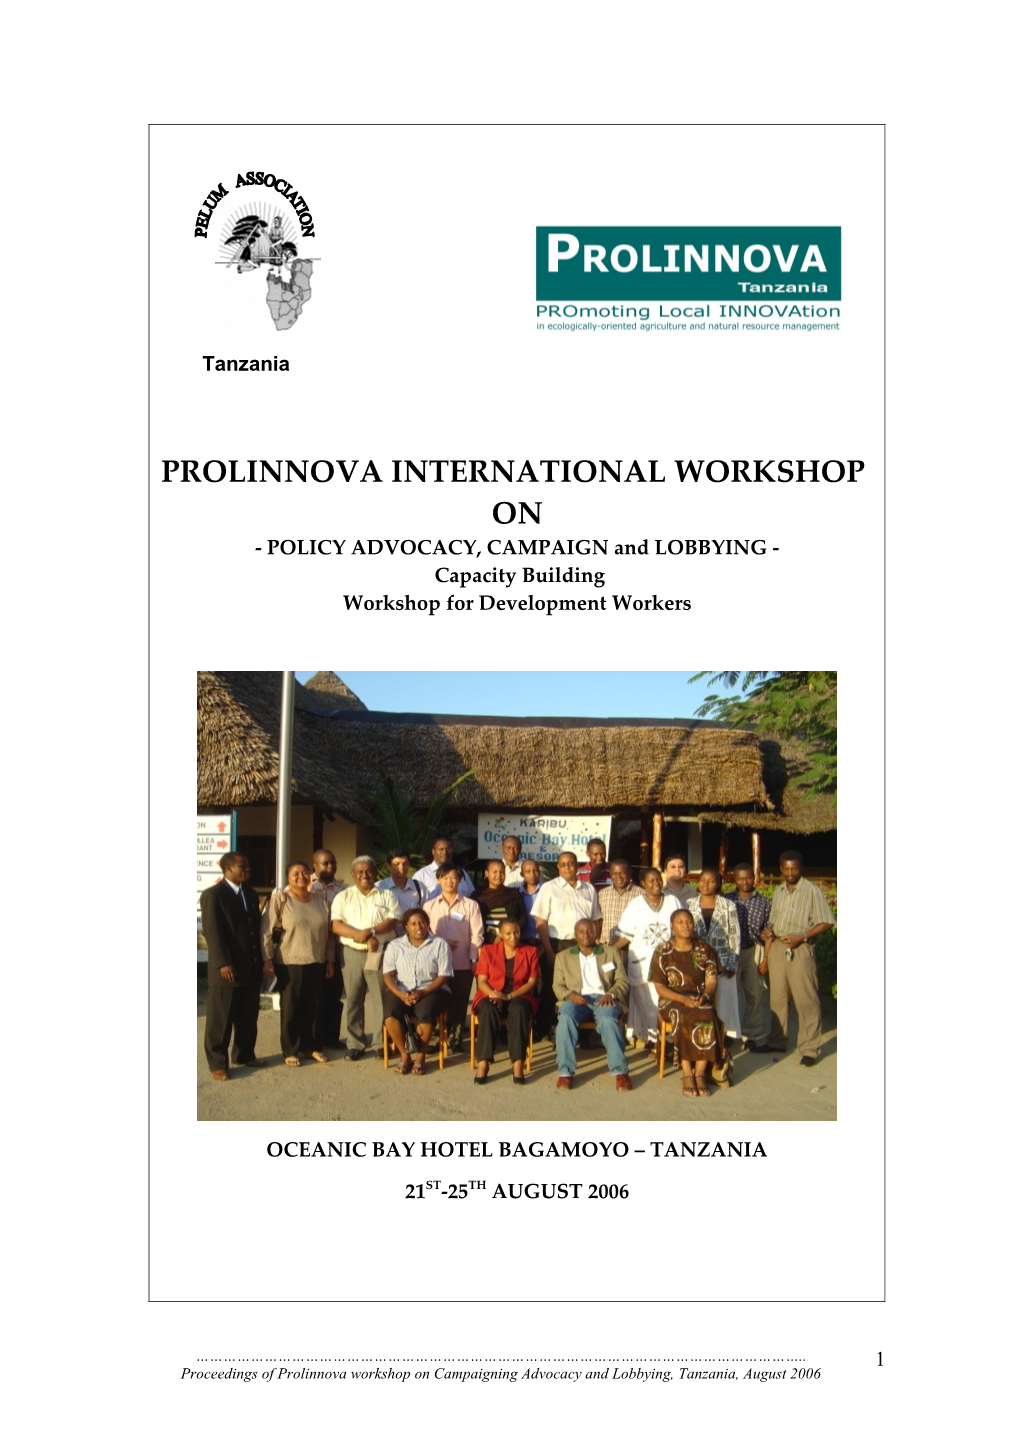 Prolinnova International Workshop